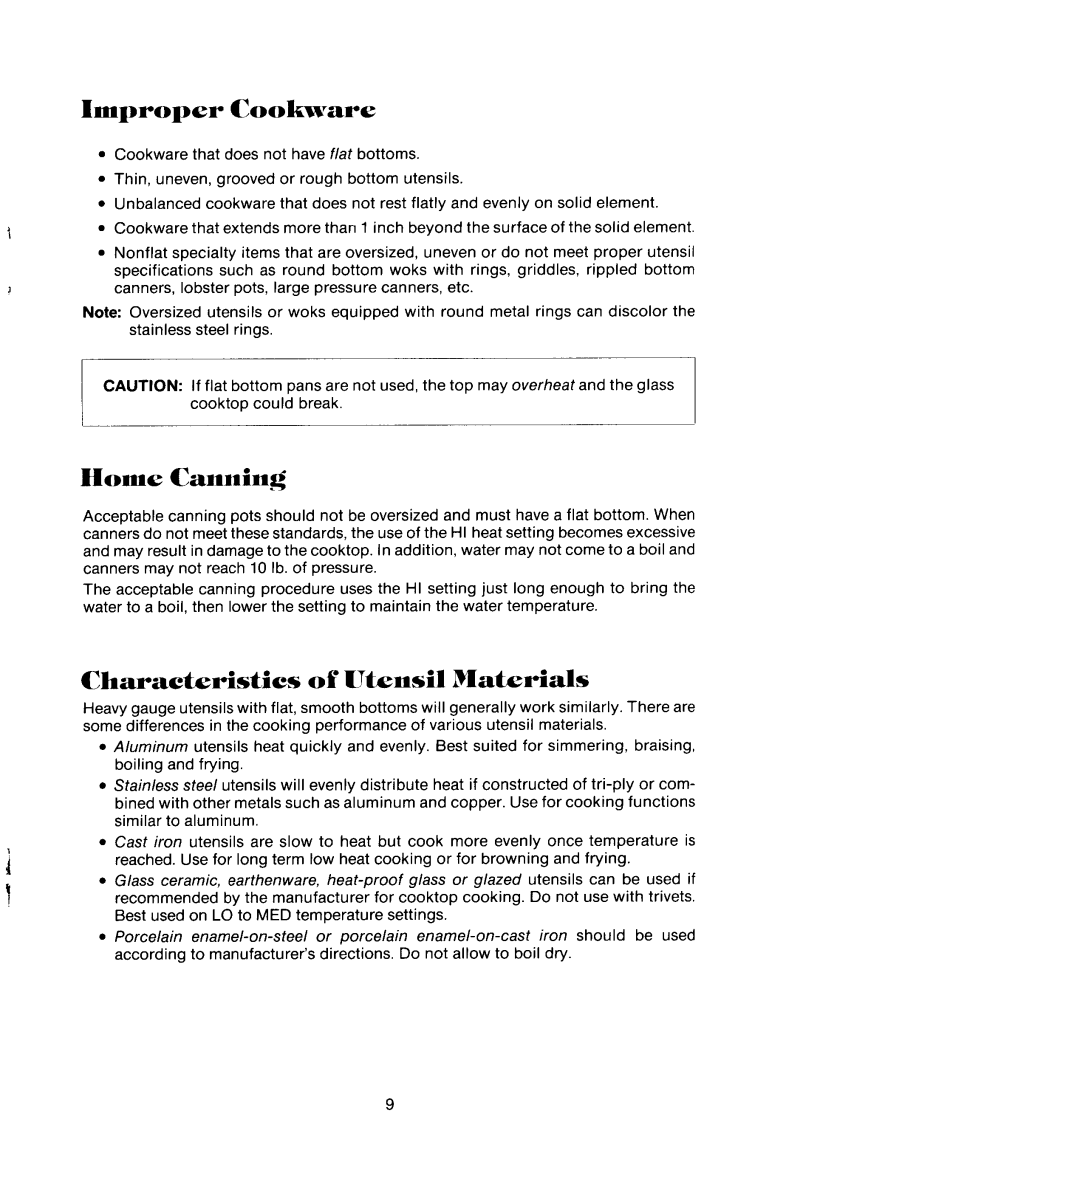 Jenn-Air CCS446 manual Improper Cookware, Home Canning, Characteristics of Utensil Materials 